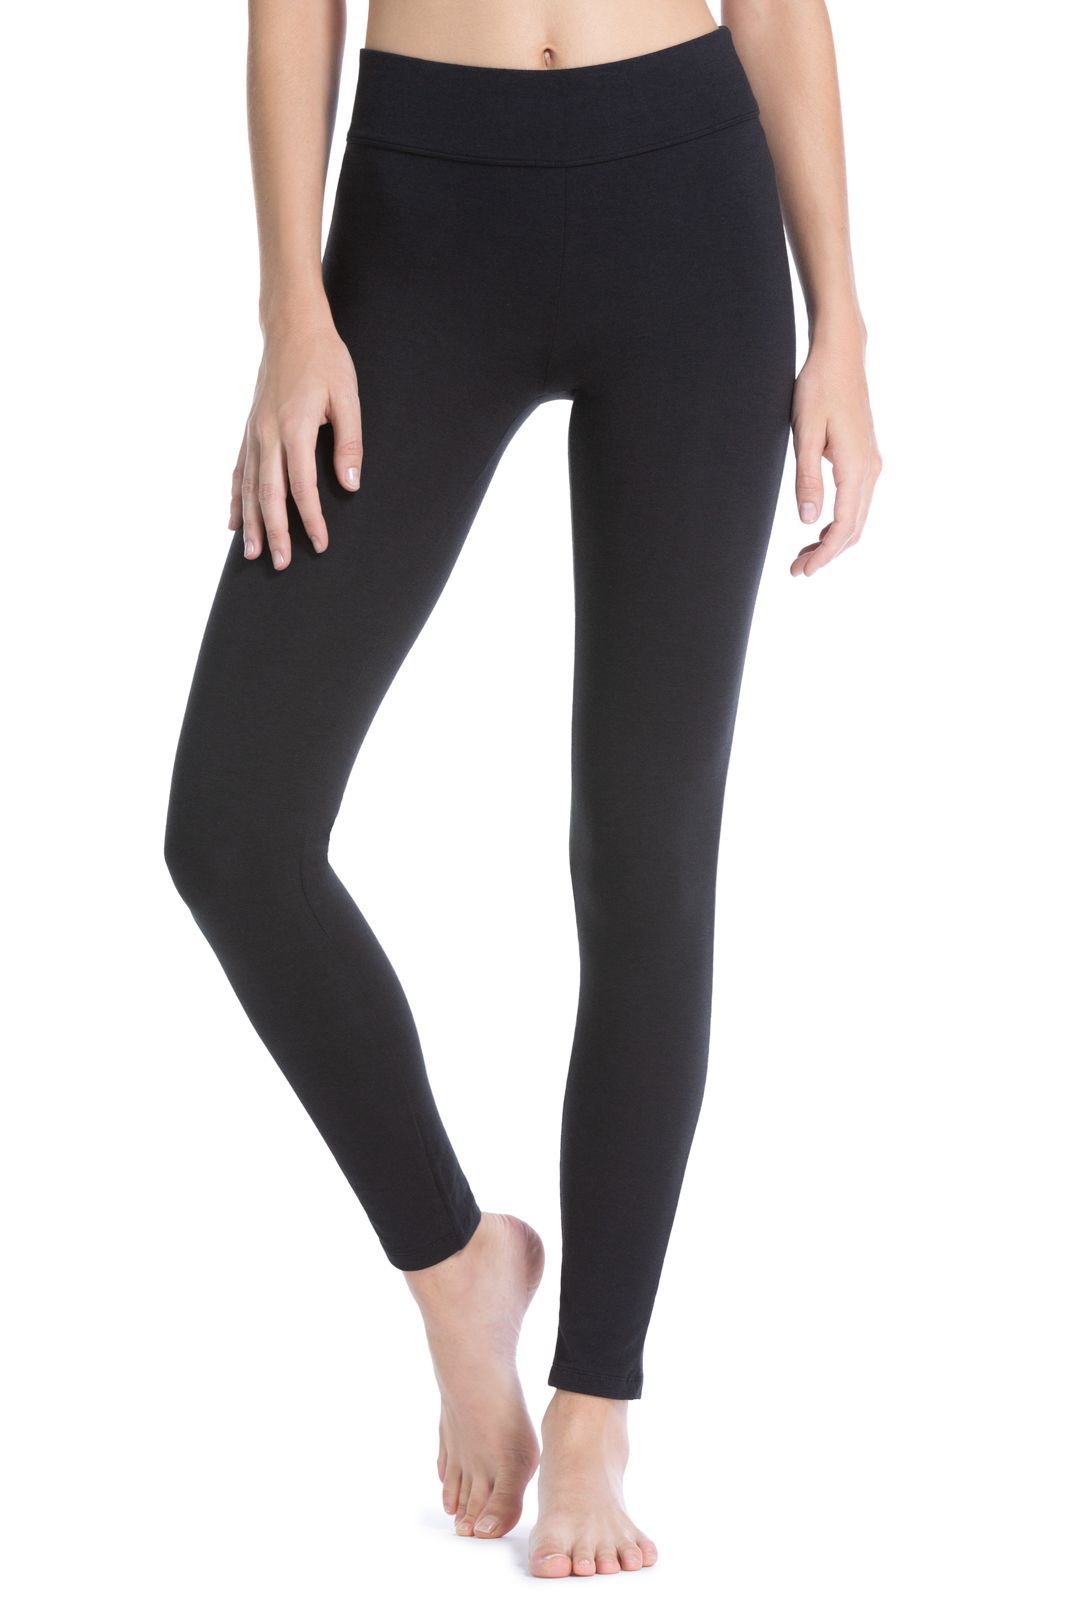 ELEGANCE1234 Ladies Soft Stretch Plain Full Long Ankle Length Black Viscose  Leggings (Small, Black) at  Women's Clothing store